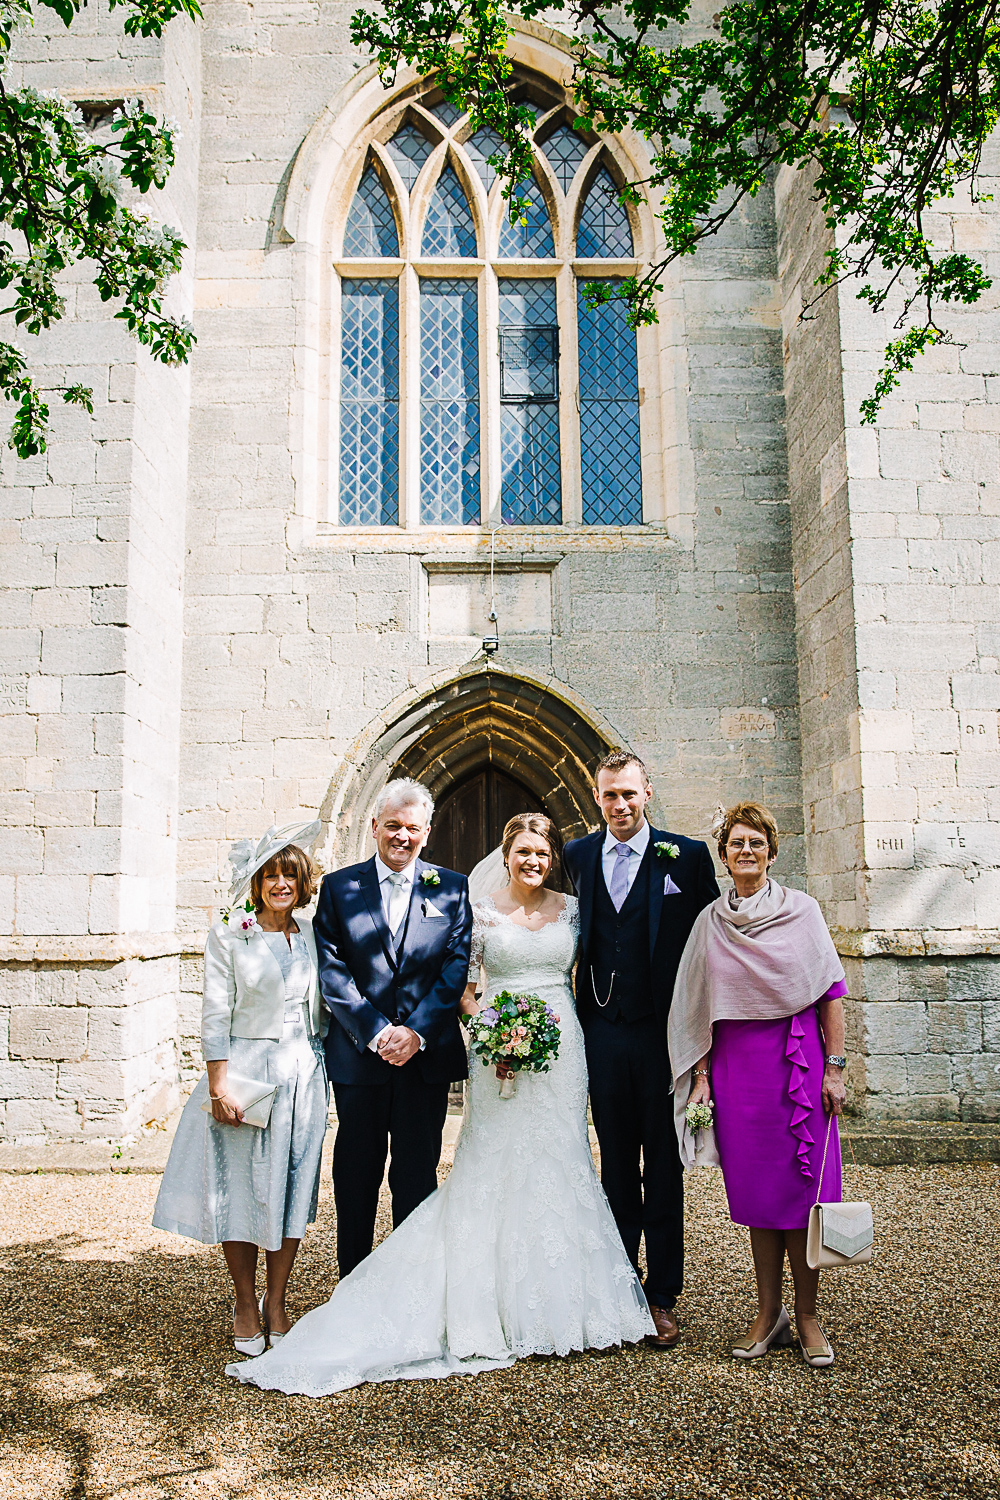 Wedding Party at Cottenham All Saint’s Church - Swynford Manor Wedding Photographer